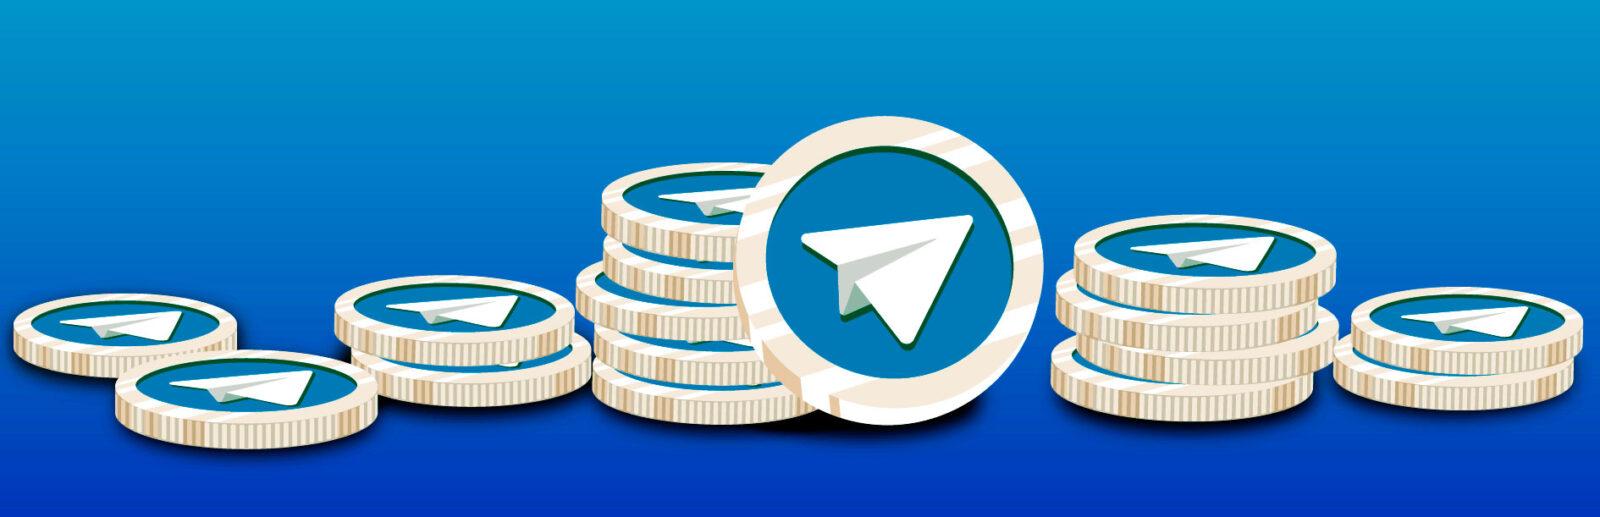 telegram crypto ico